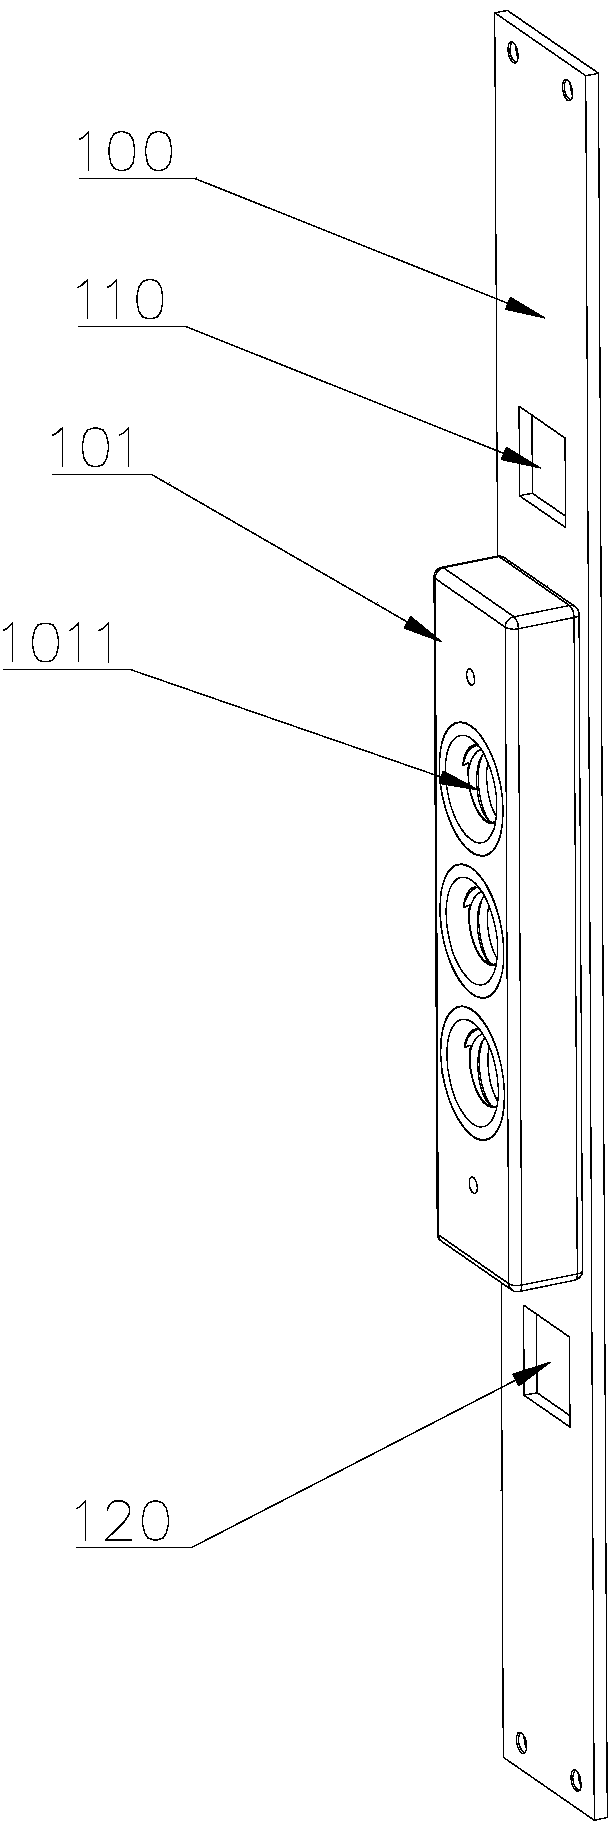 Lock and anti-theft door